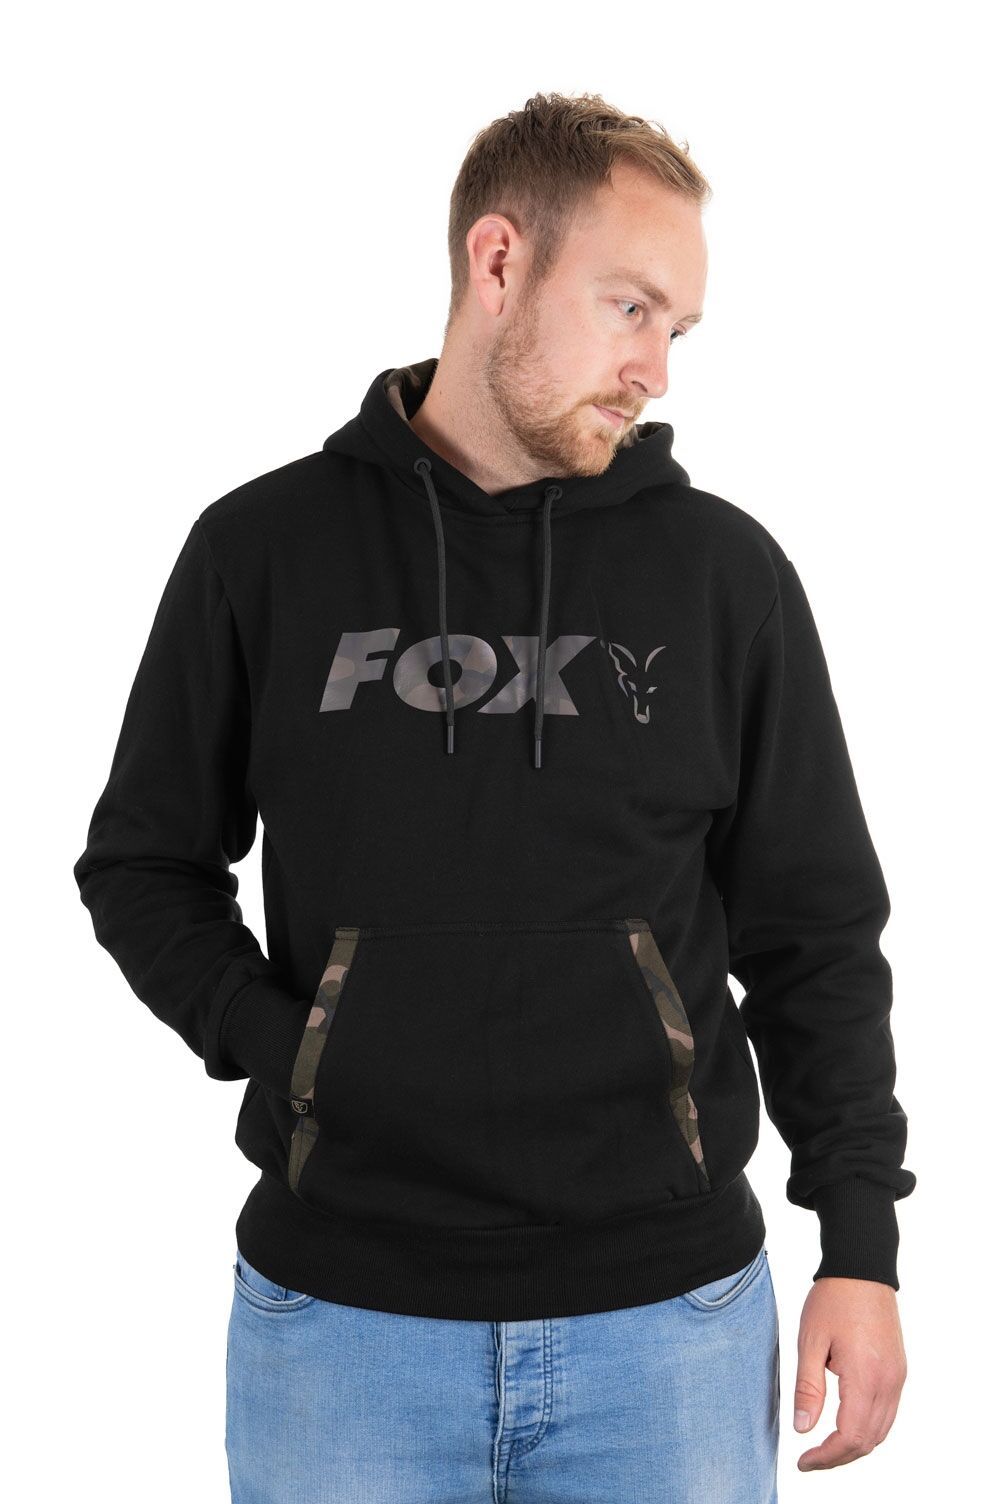 Fox LW Black/Camo Print Zip Hoody Fashion Carp Fishing Clothing 